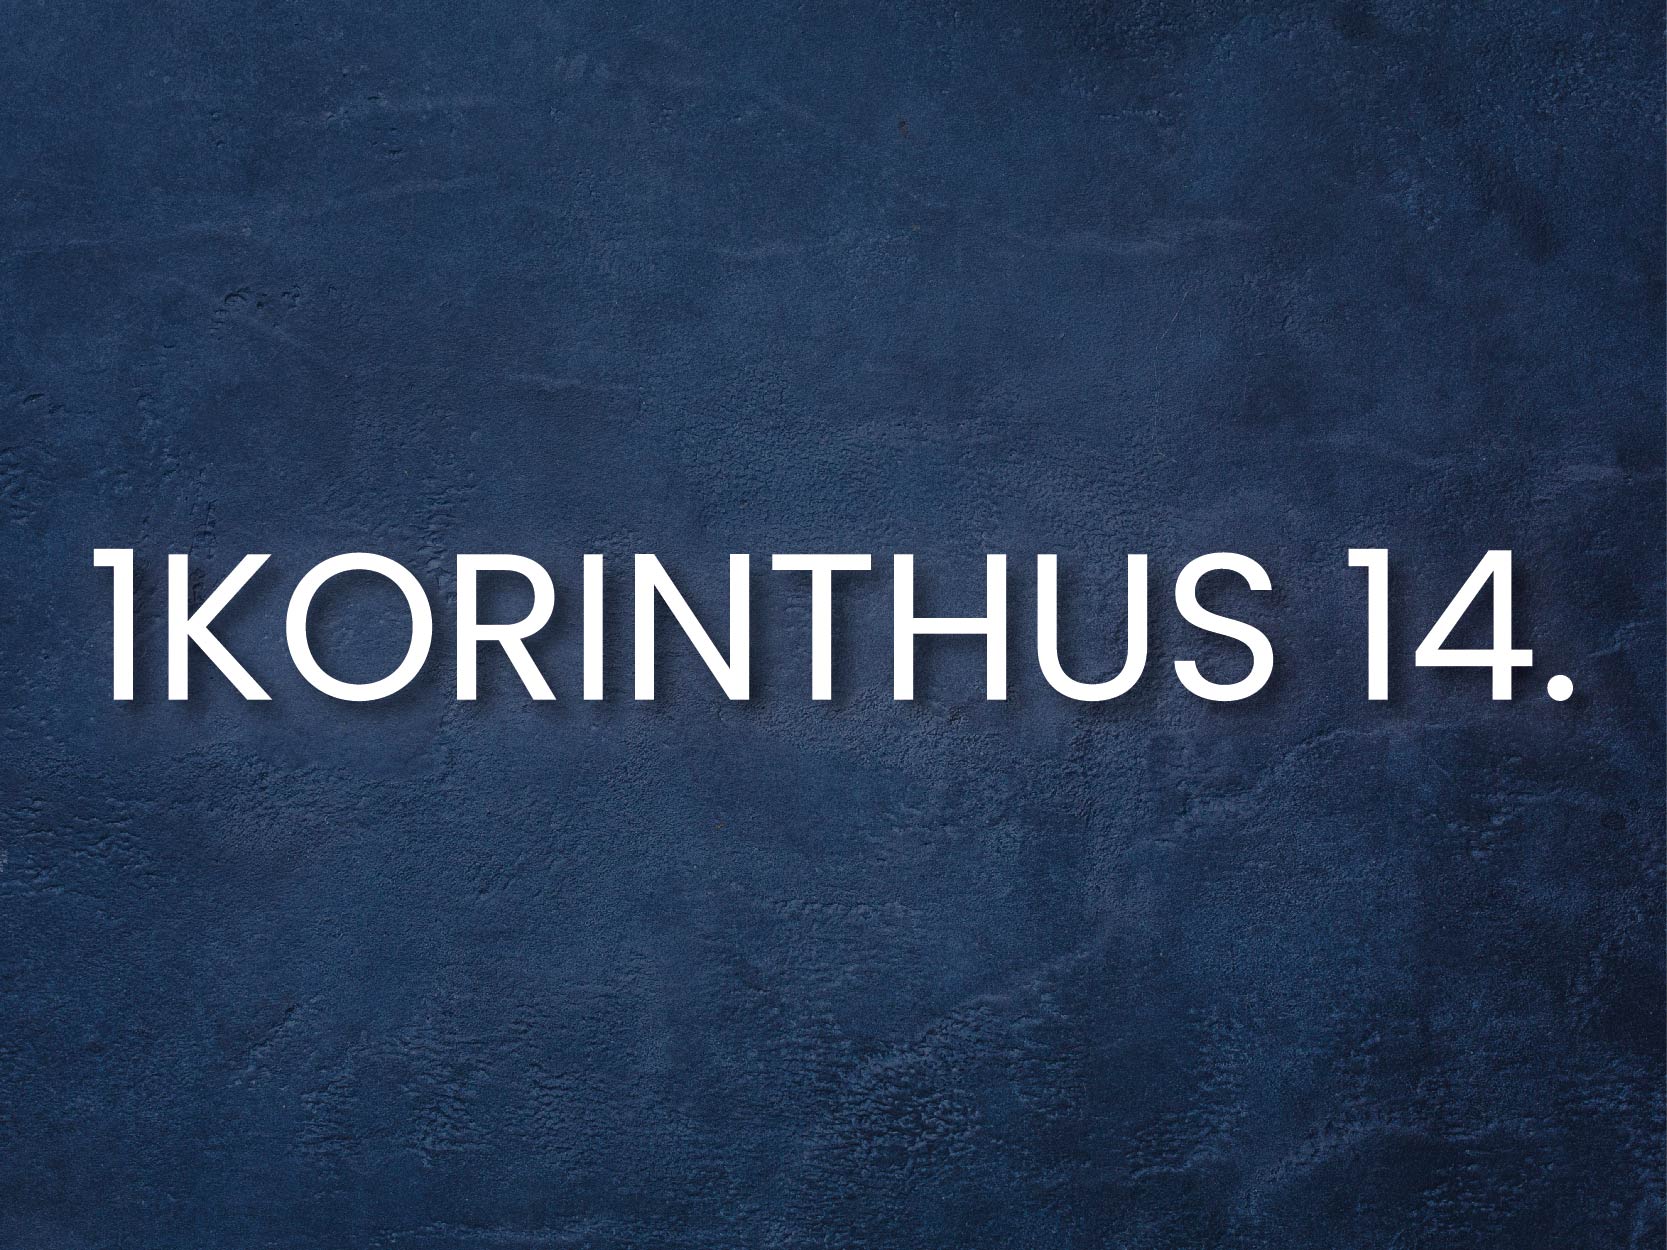 INFO_korinthus_14